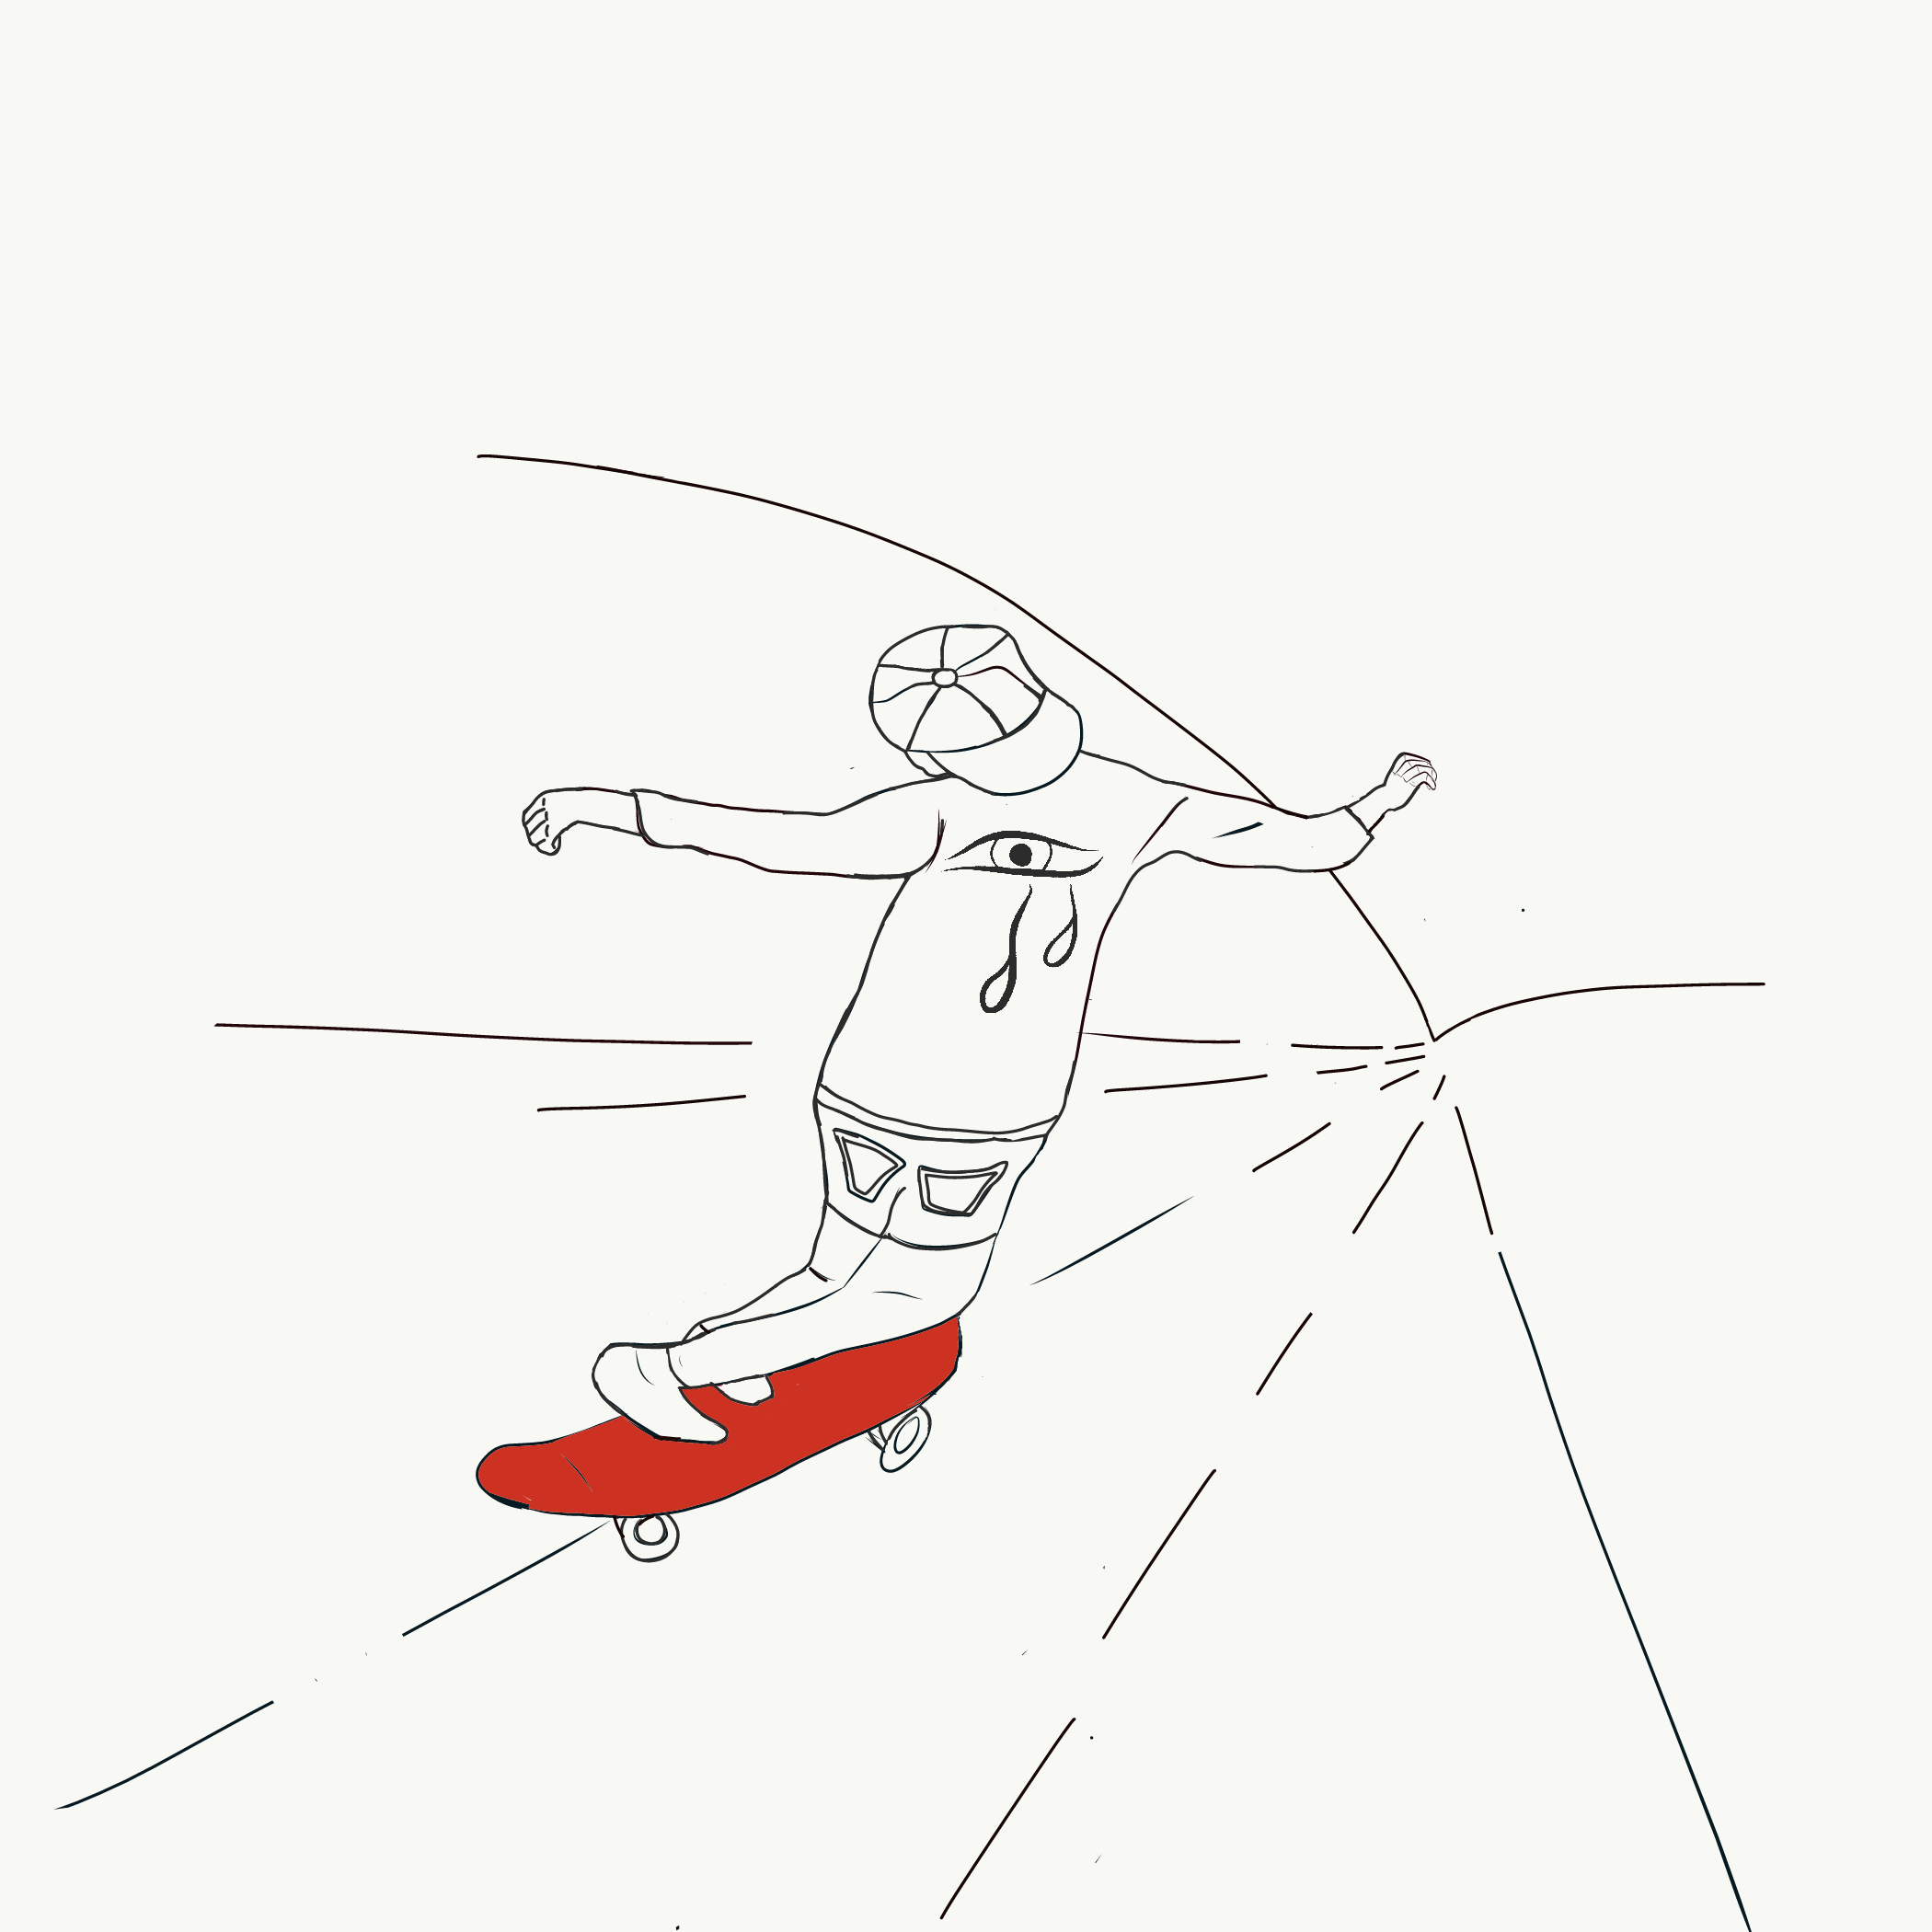 Barefoot and happy skater (skateboarder)